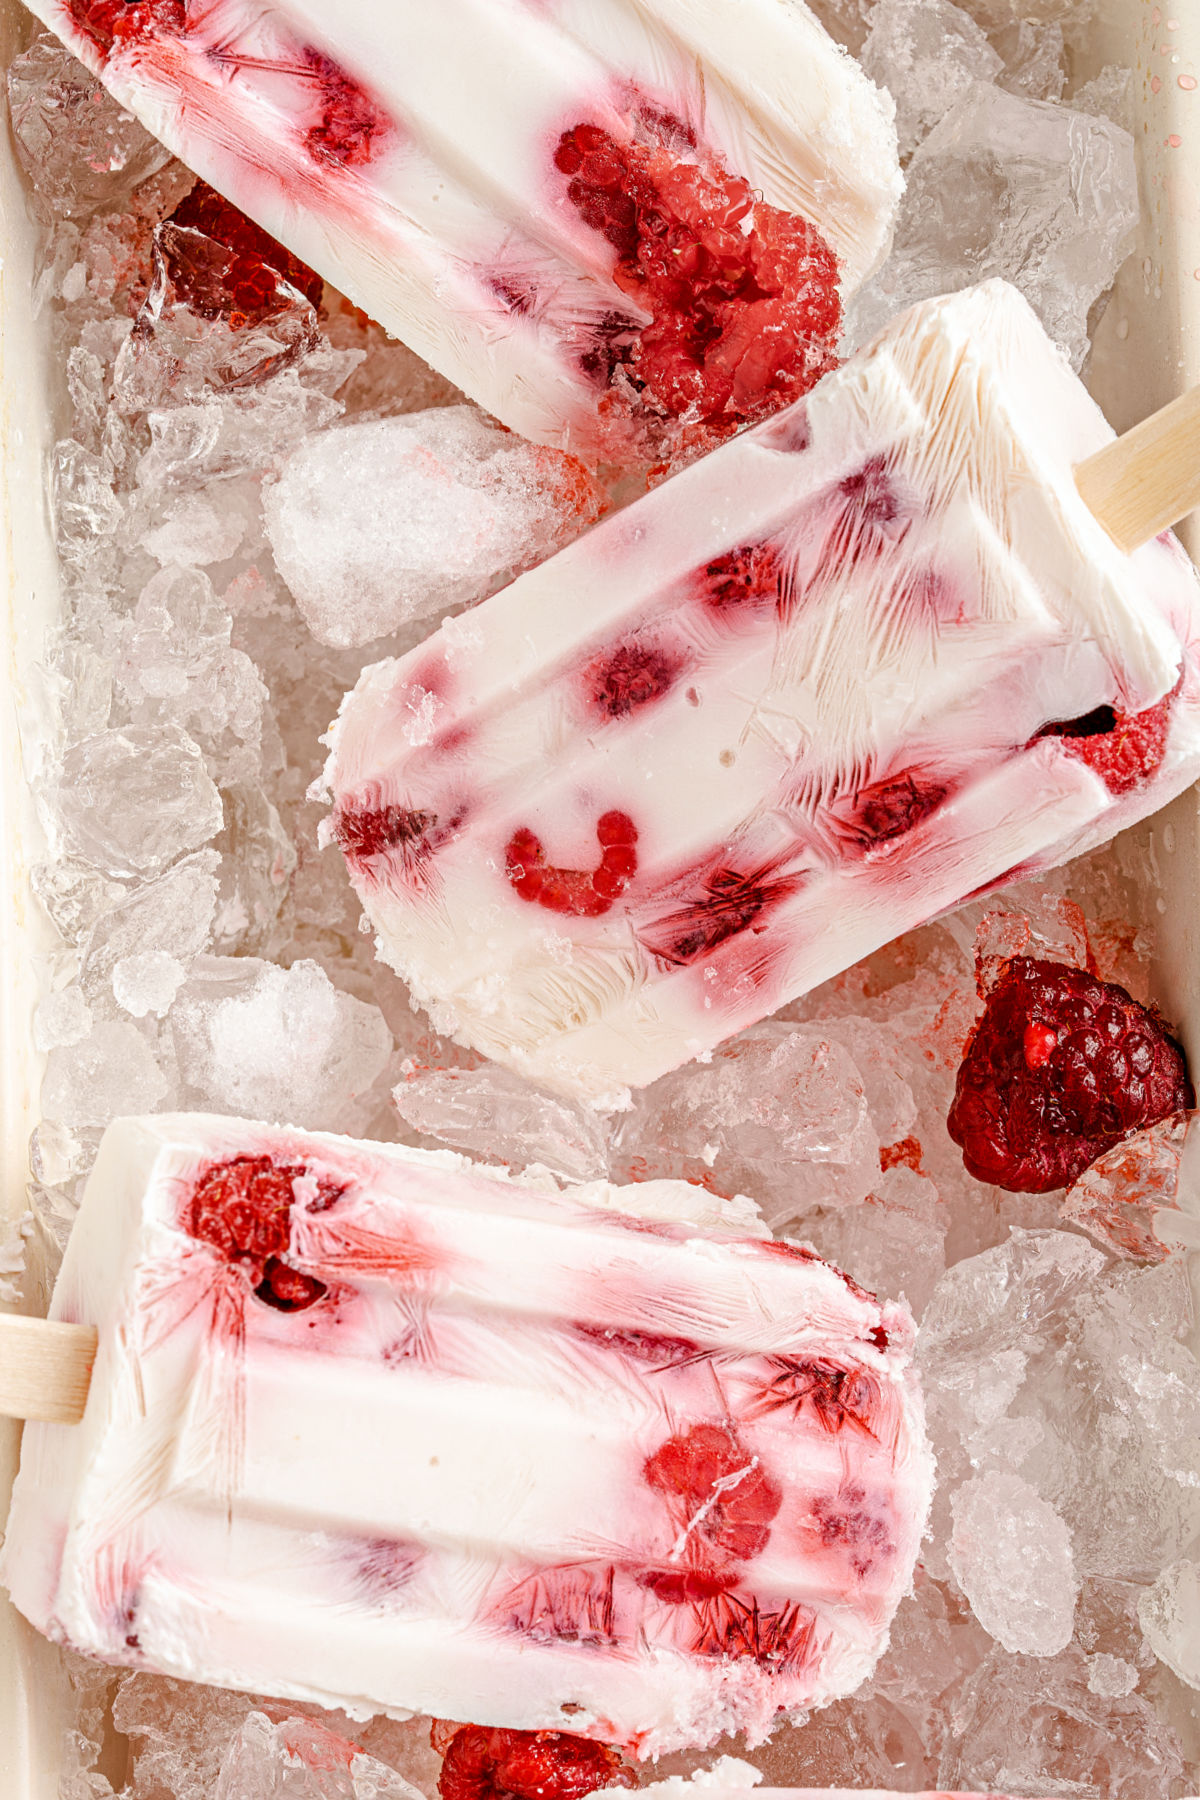 Yogurt popsicles with raspberries on a pan of ice.